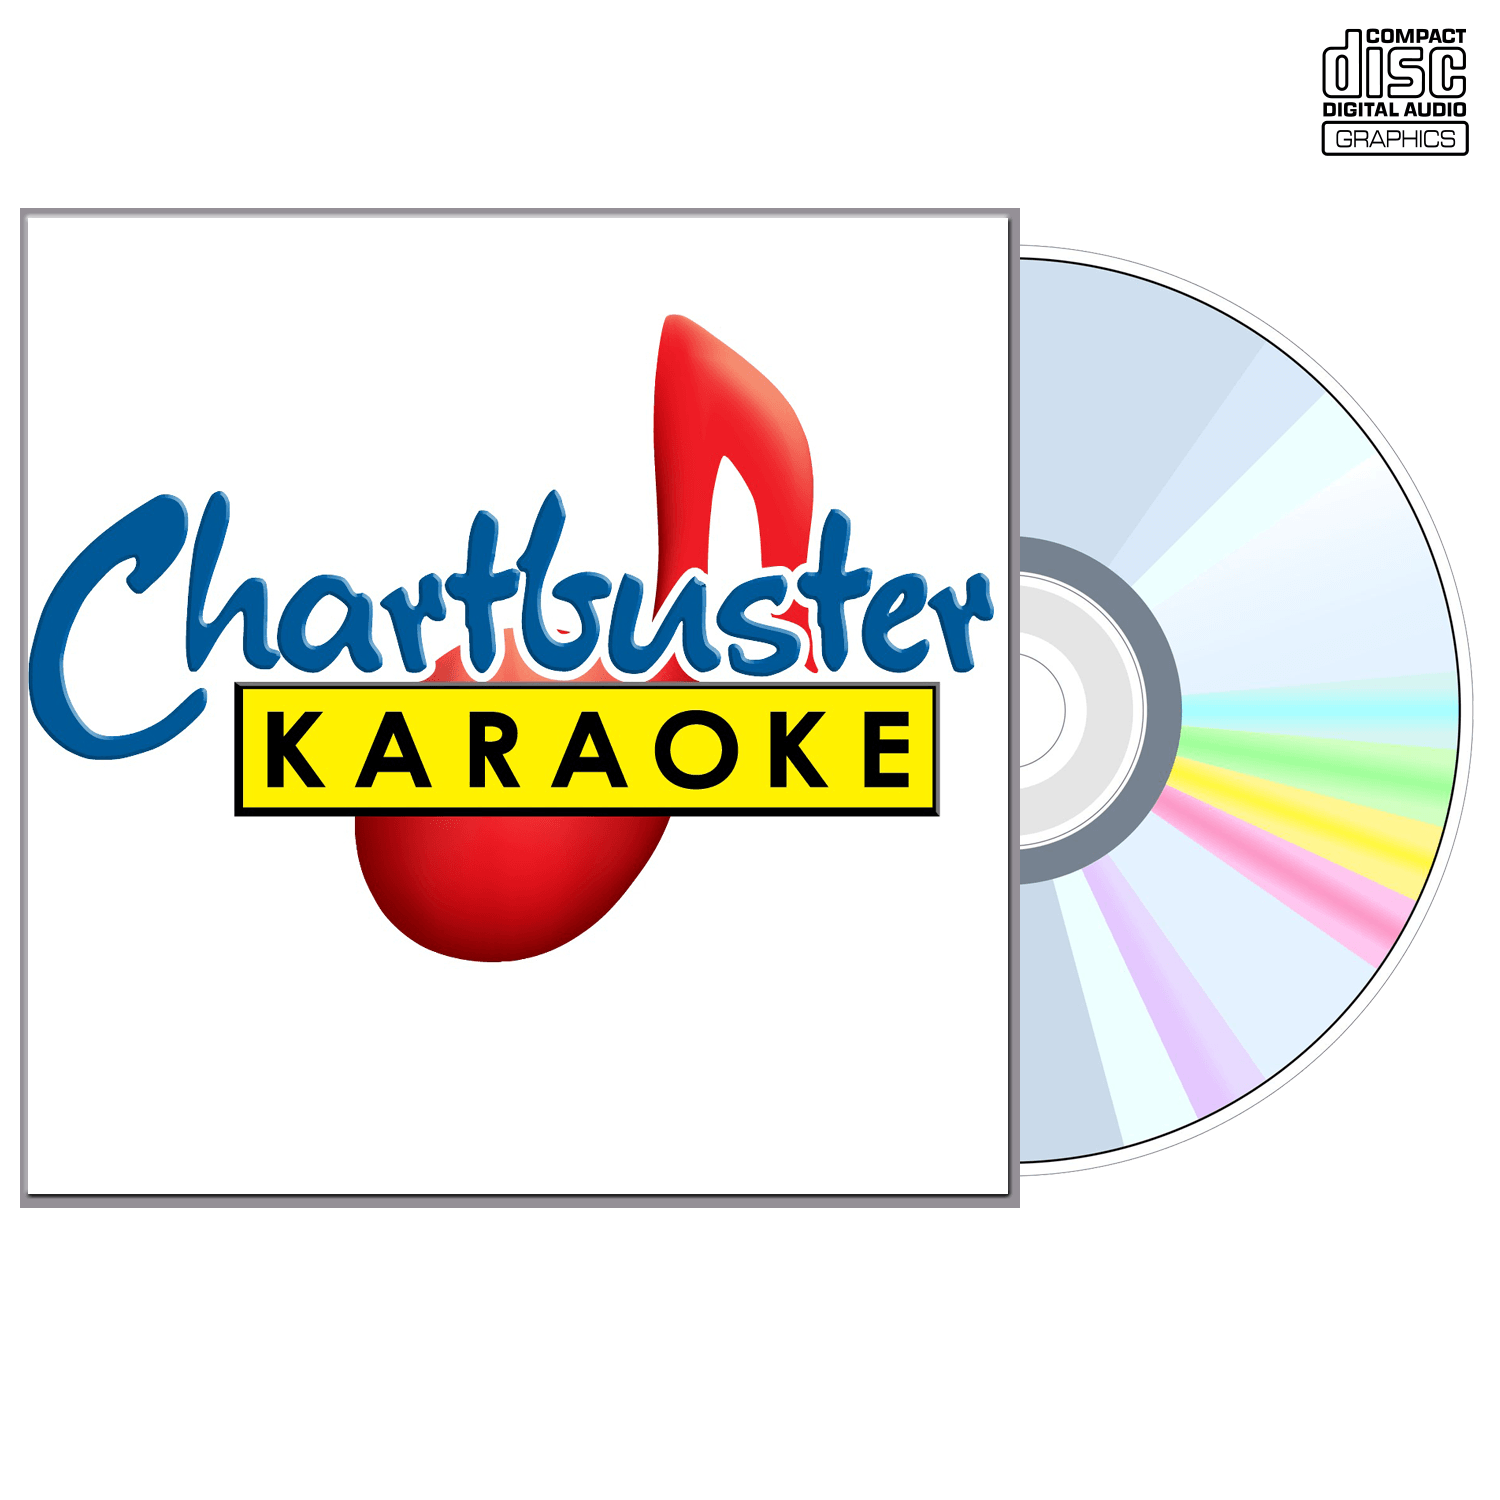 70's 10 Disc Set Vol 01 - CD+G - Chartbuster Karaoke - Karaoke Home Entertainment